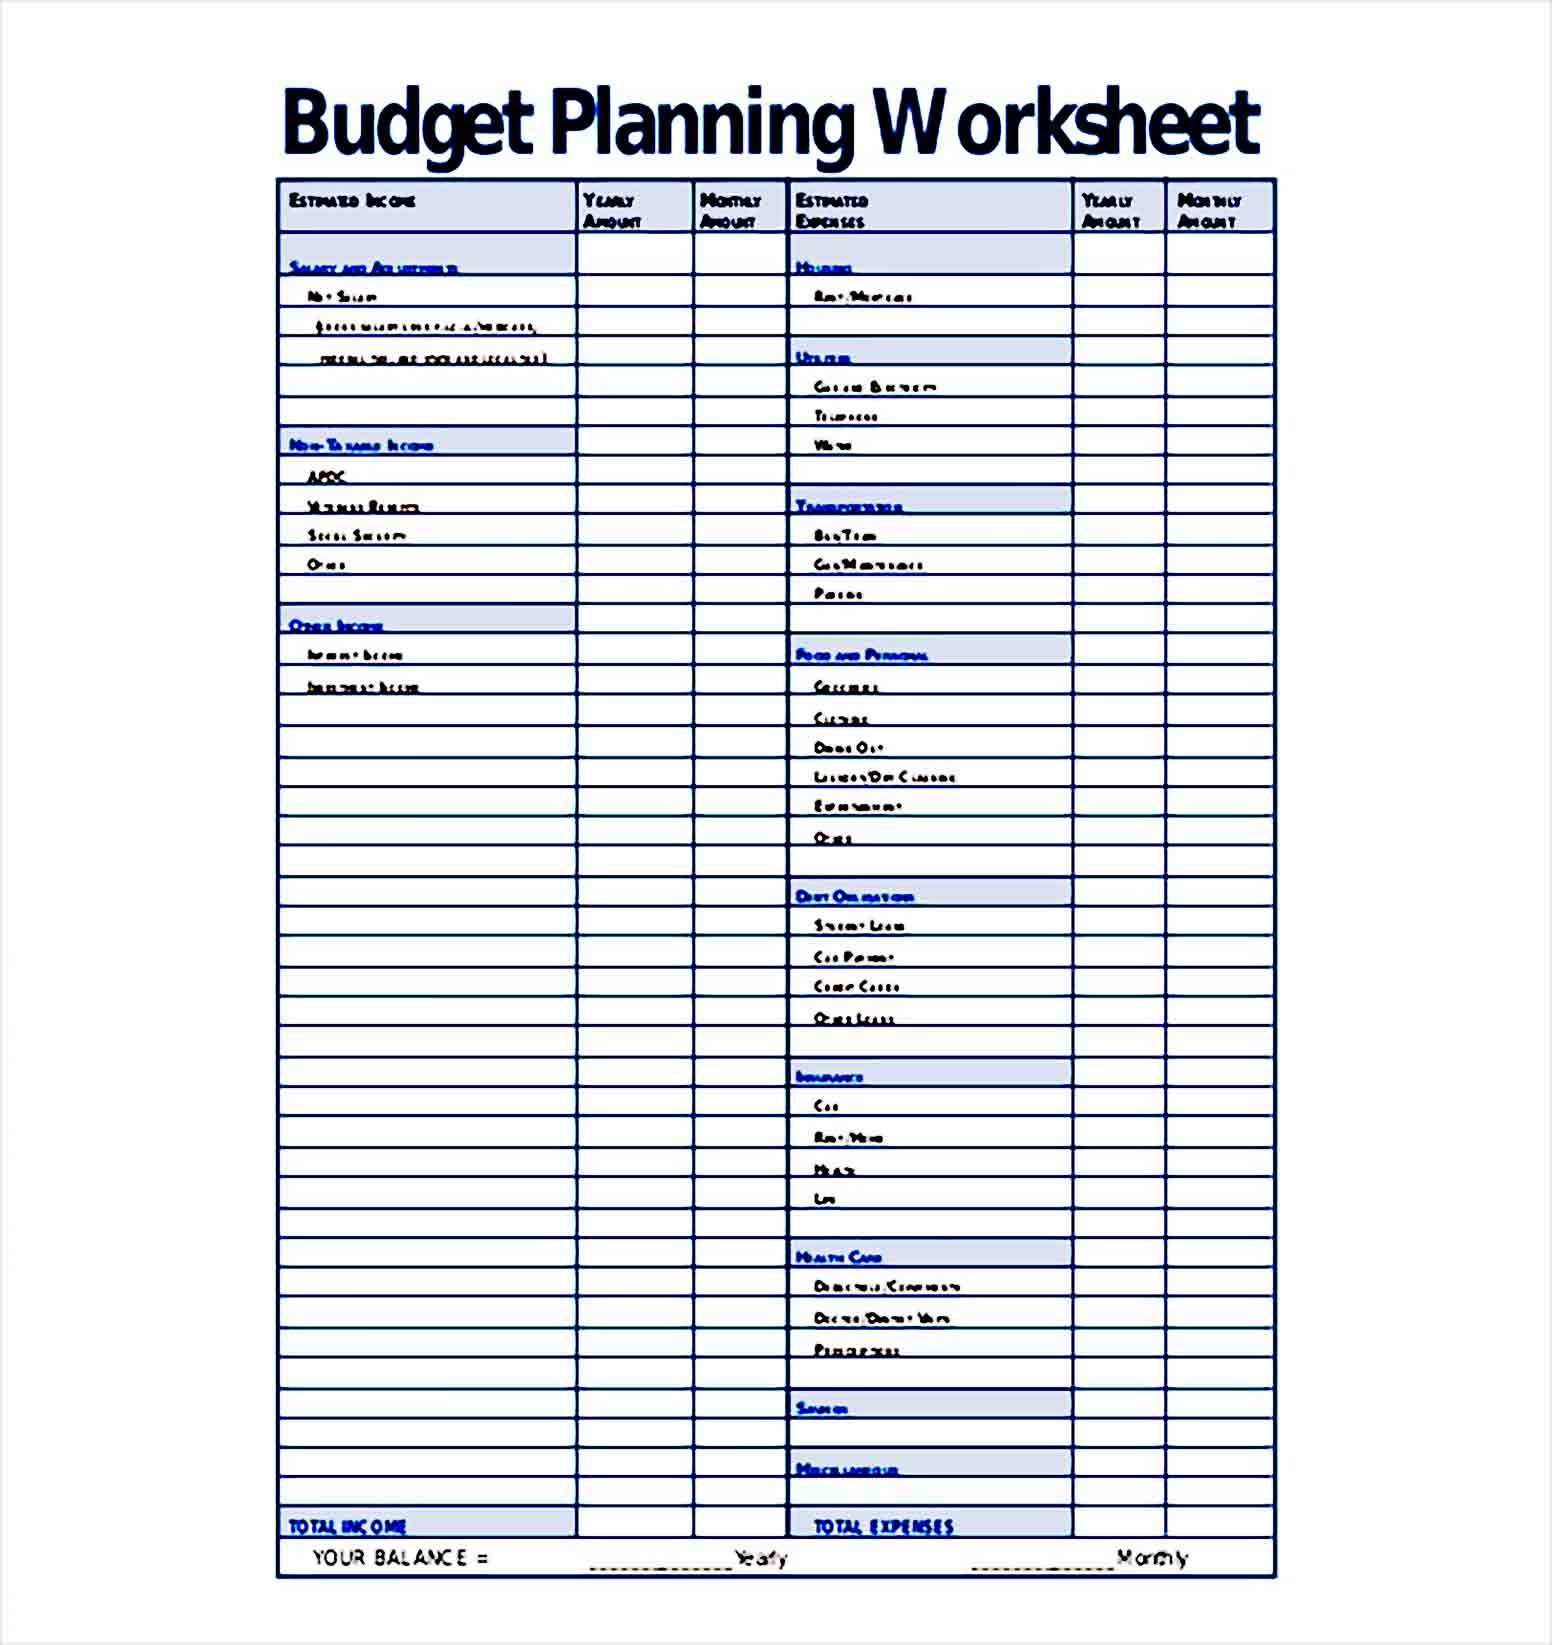 Budget Planning Worksheet Template